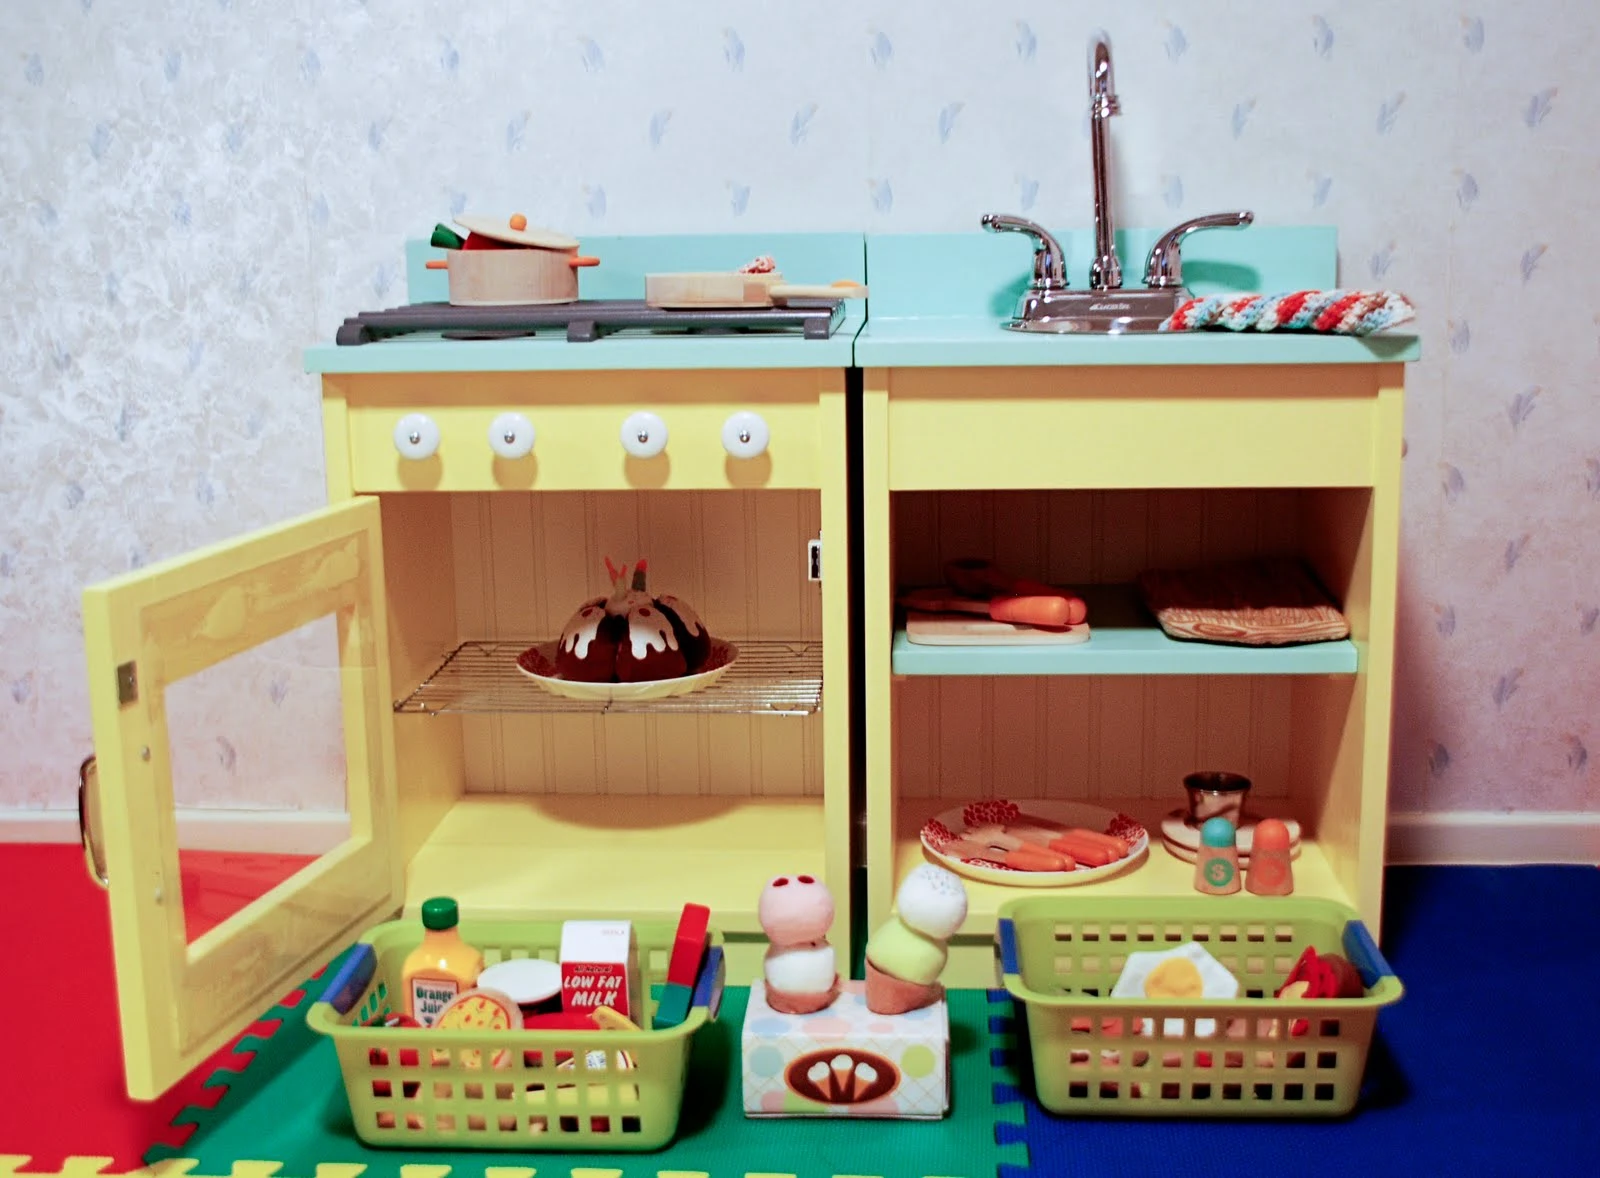 diy wooden play kitchen, play kitchen stove, play kitchen sink, homemade play kitchen, diy toy kitchen